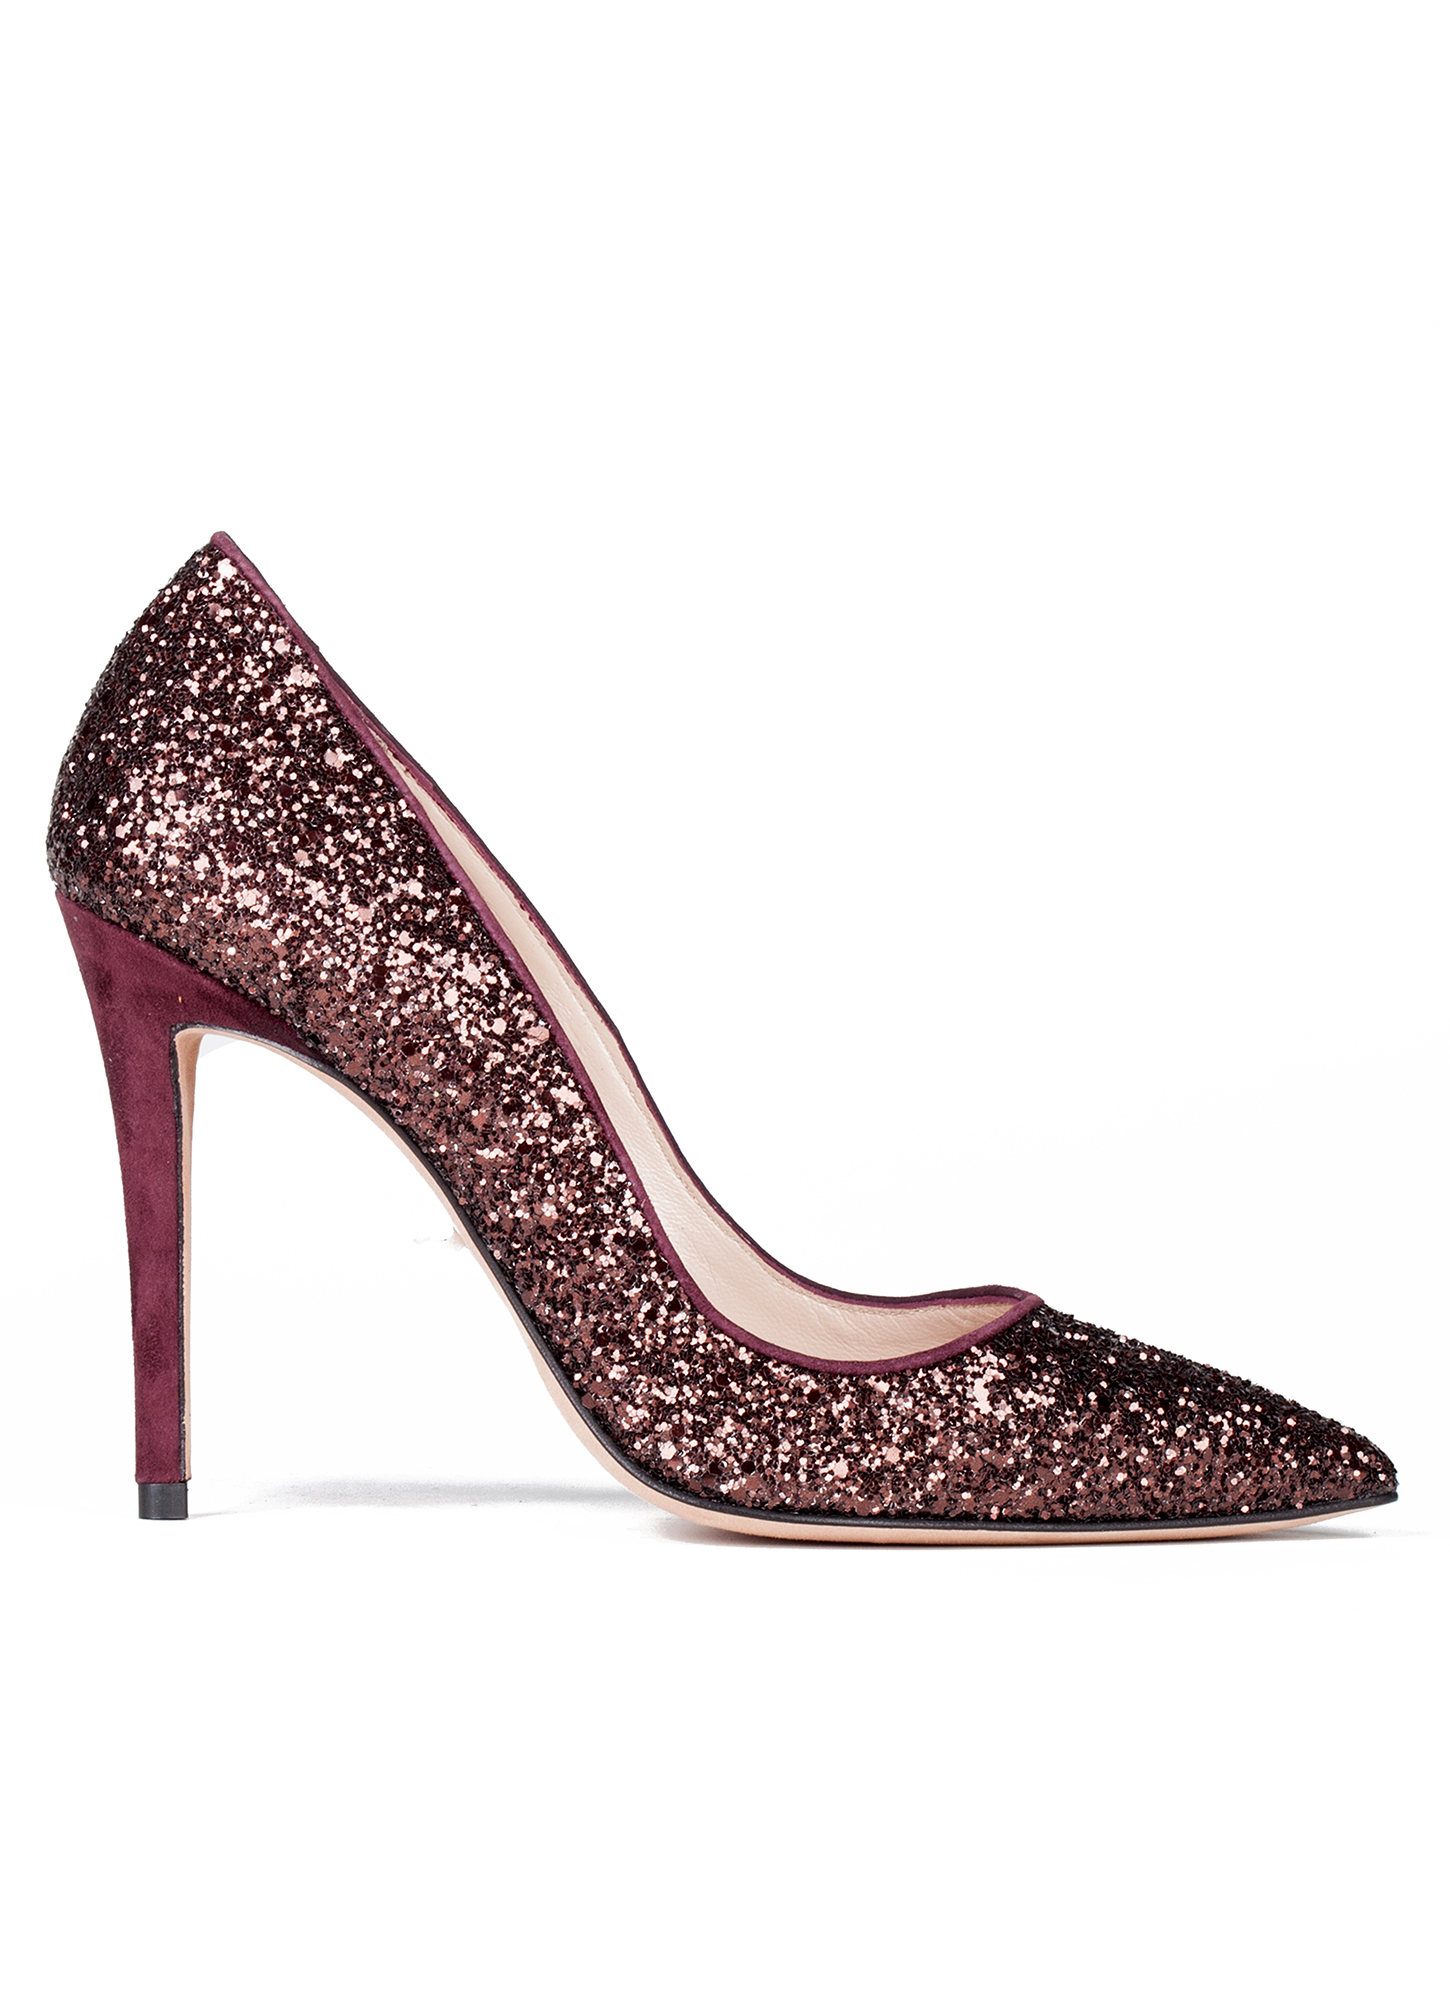 High heel pumps in burgundy glitter - online shoe store Pura Lopez ...